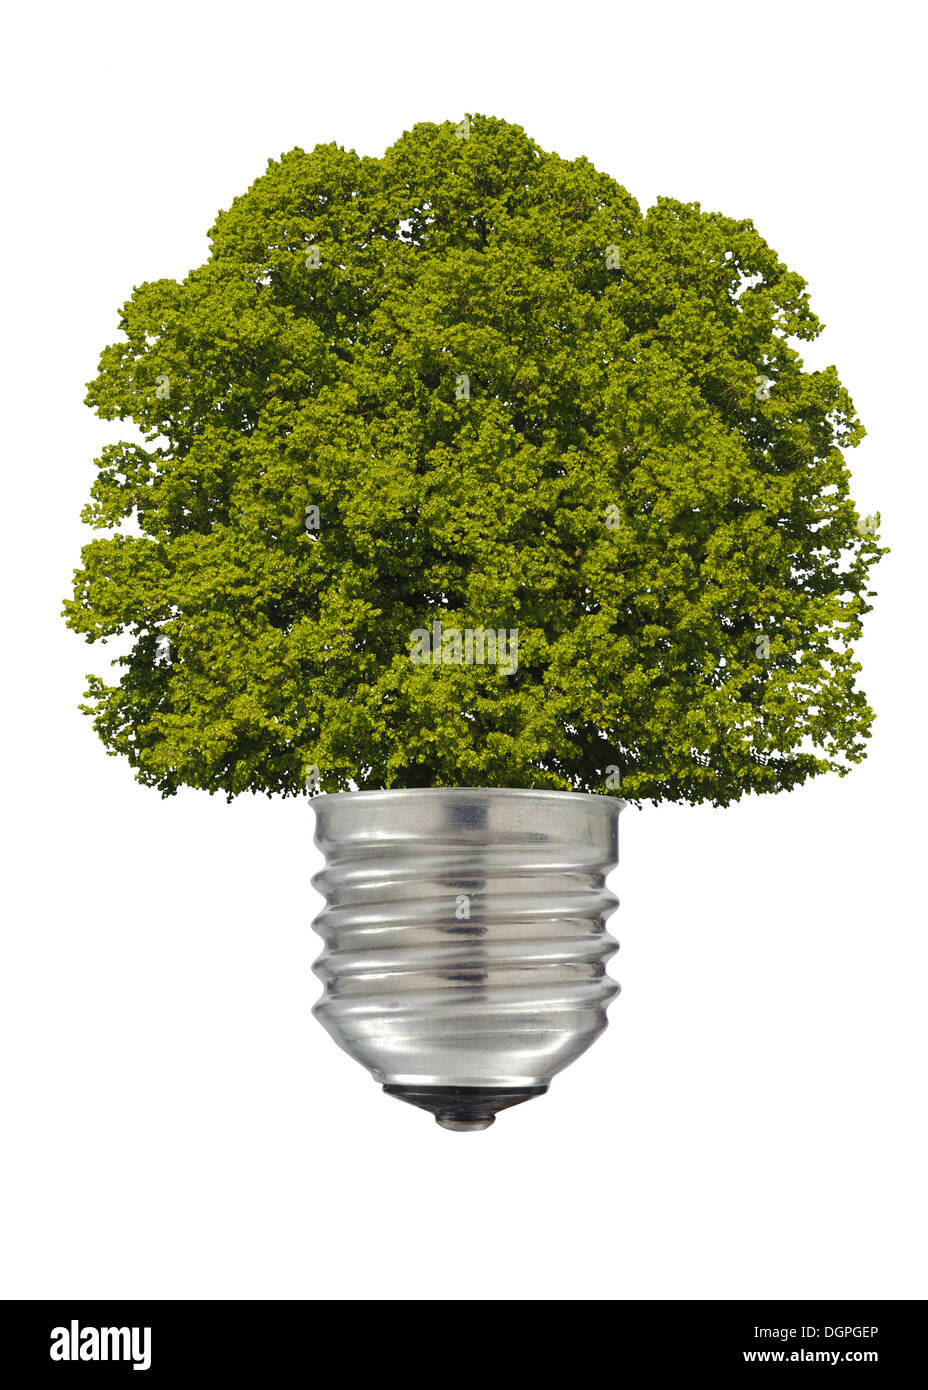 regenerative electric energy and lamp Stock Photo